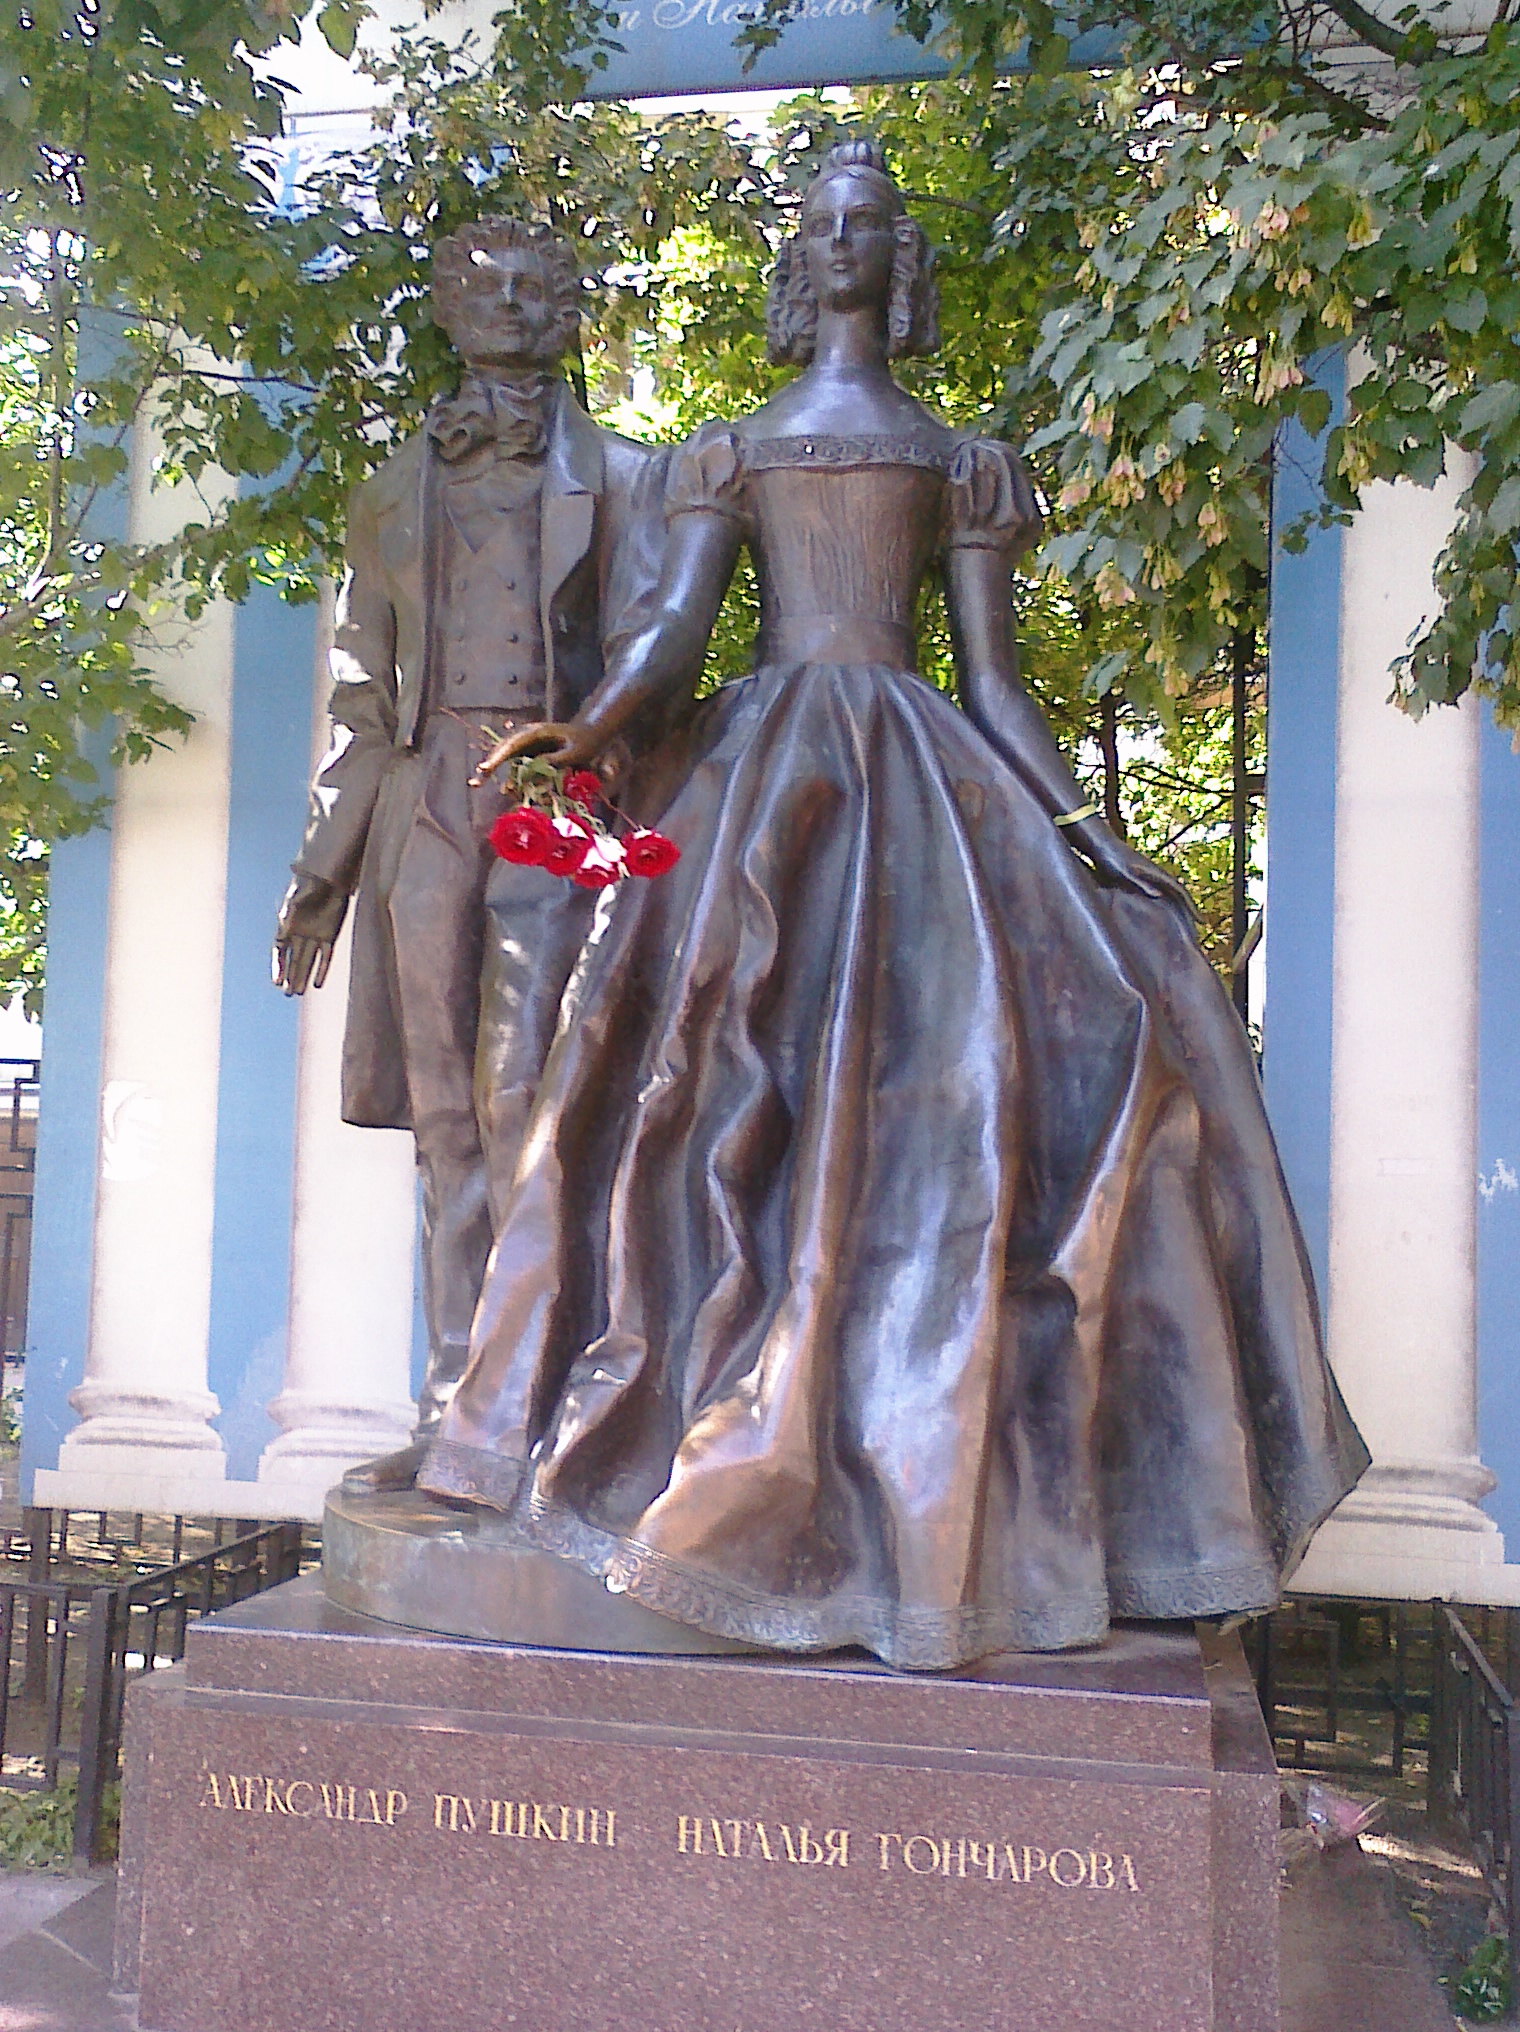 Pushkin and wife statute in Moscow CIMG0509 (2).jpg